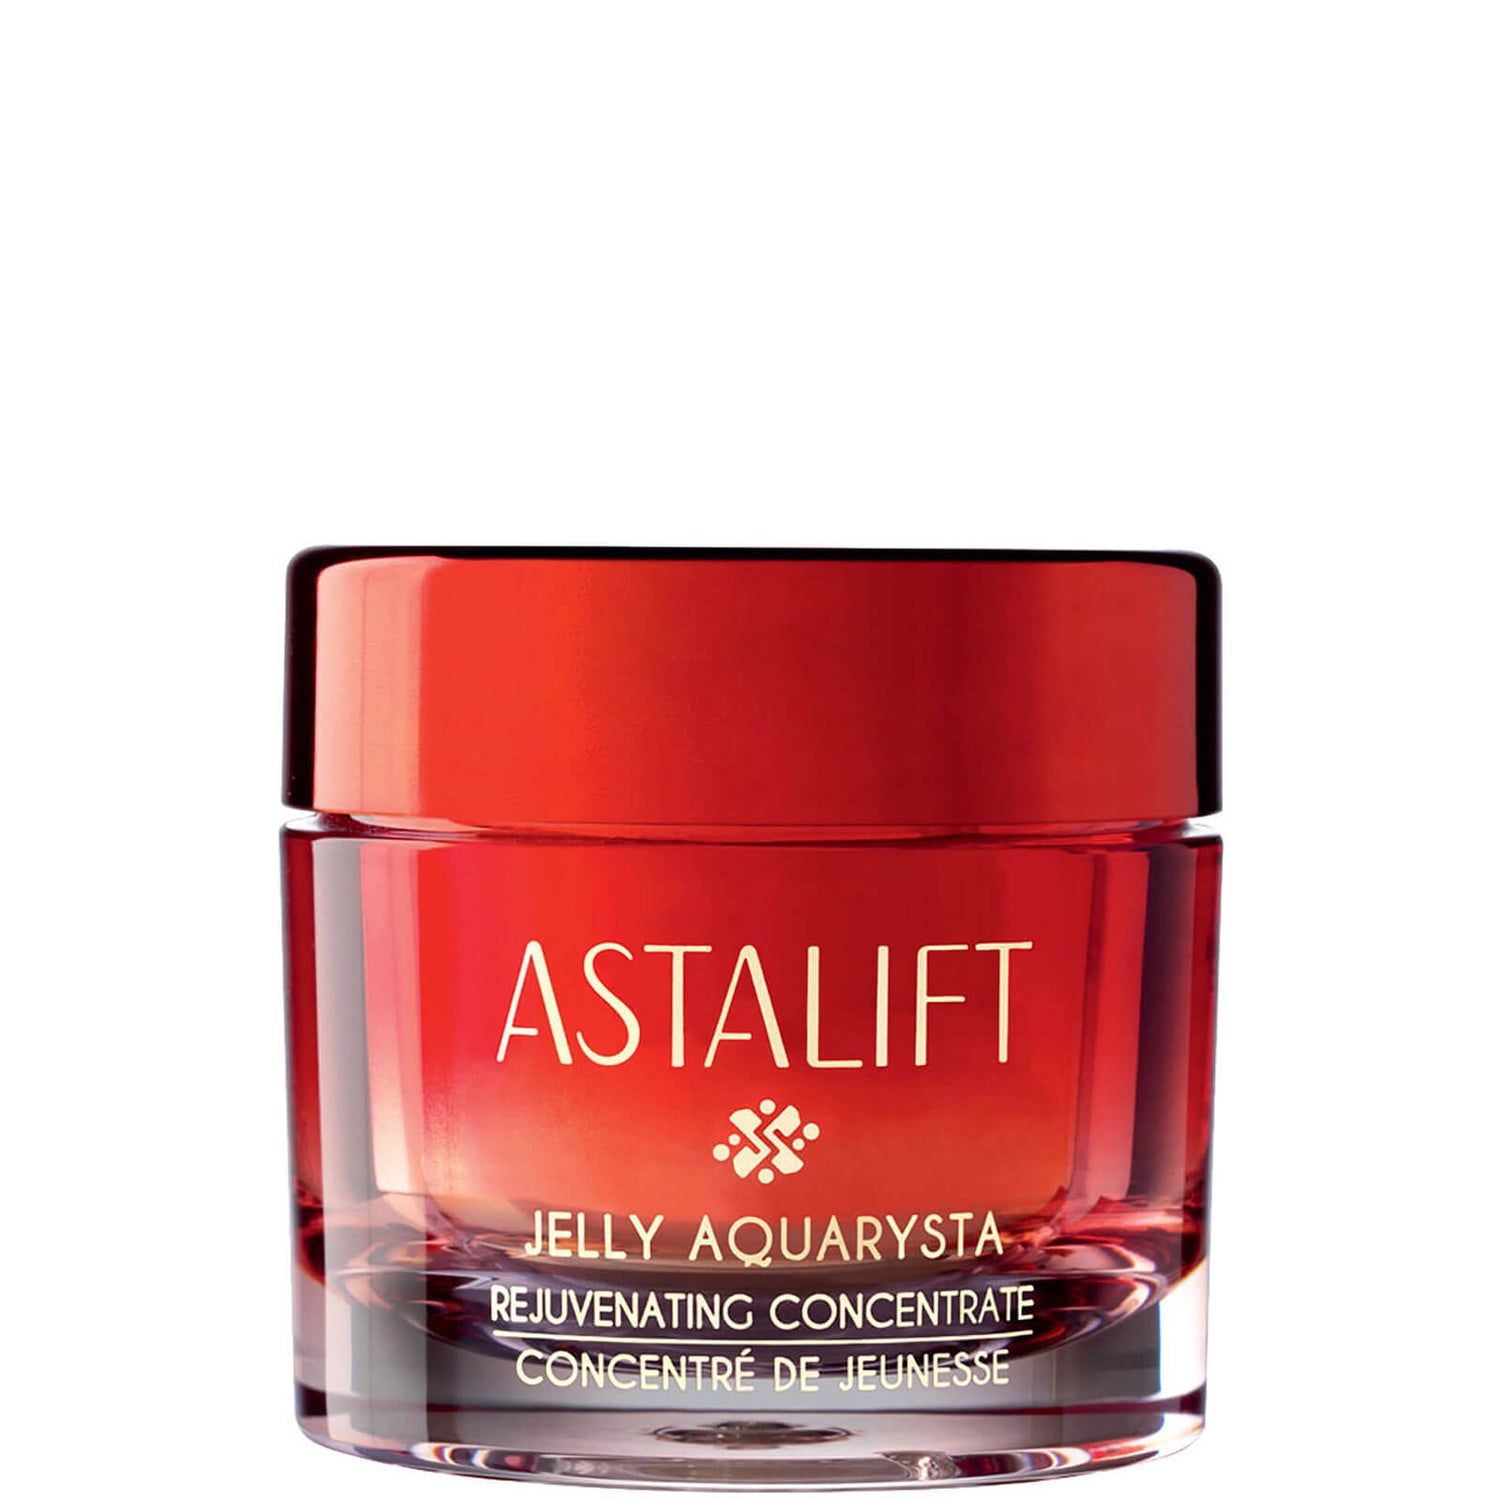 Astalift Jelly Aquarysta Rejuvenating Consentrate Serum - 60g